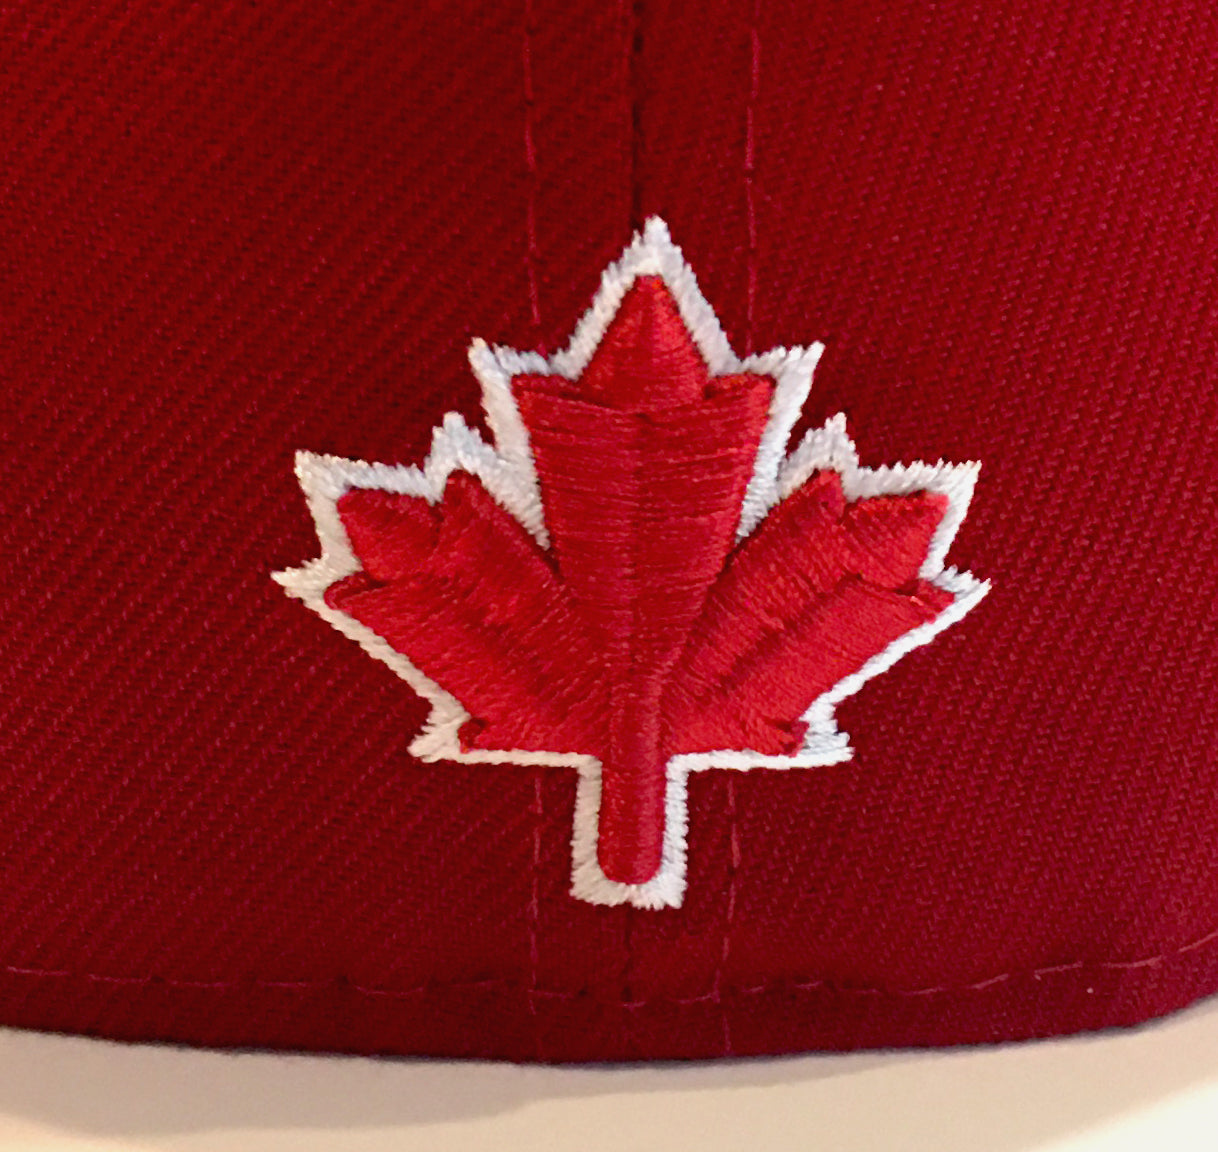 HarbourCats New Era 5950 - Classic Canada Day RED HC Baseball Cap  -The "Helen"